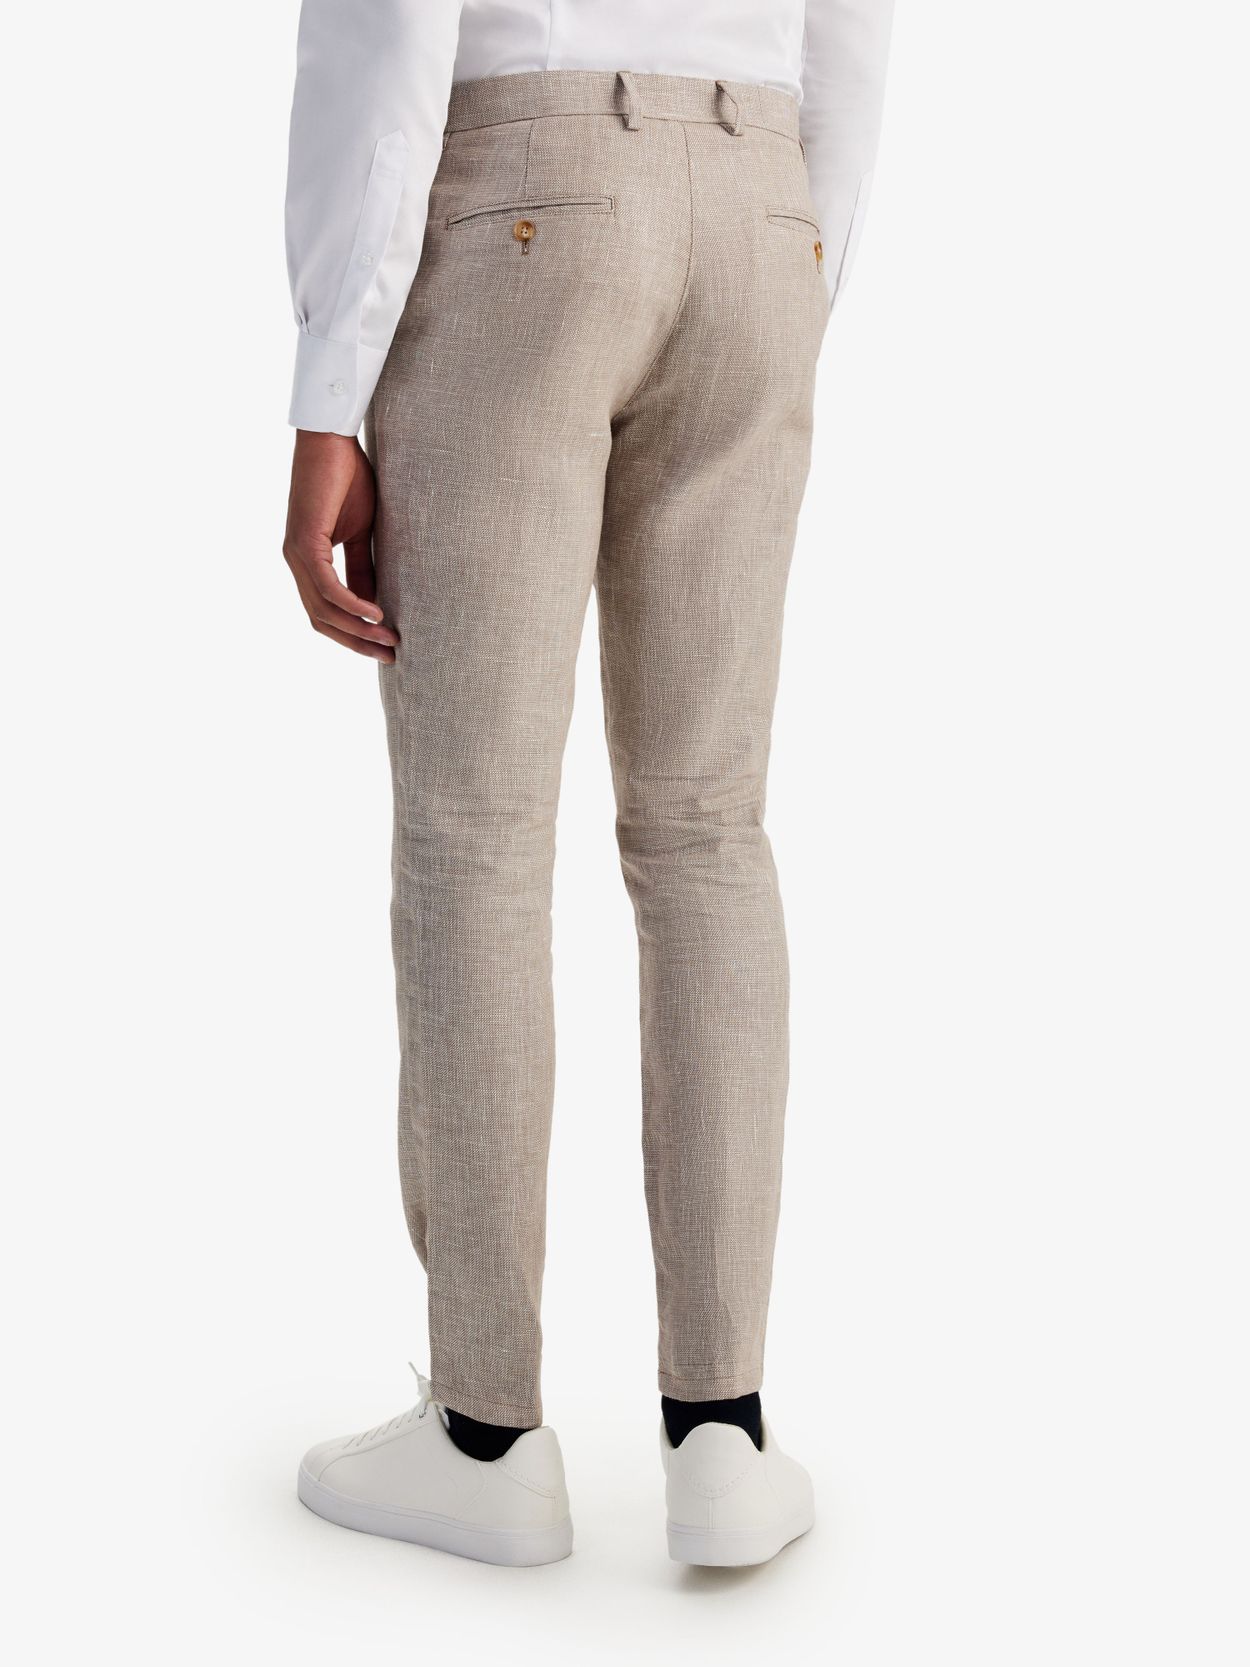 Beige Linen Blended Pants